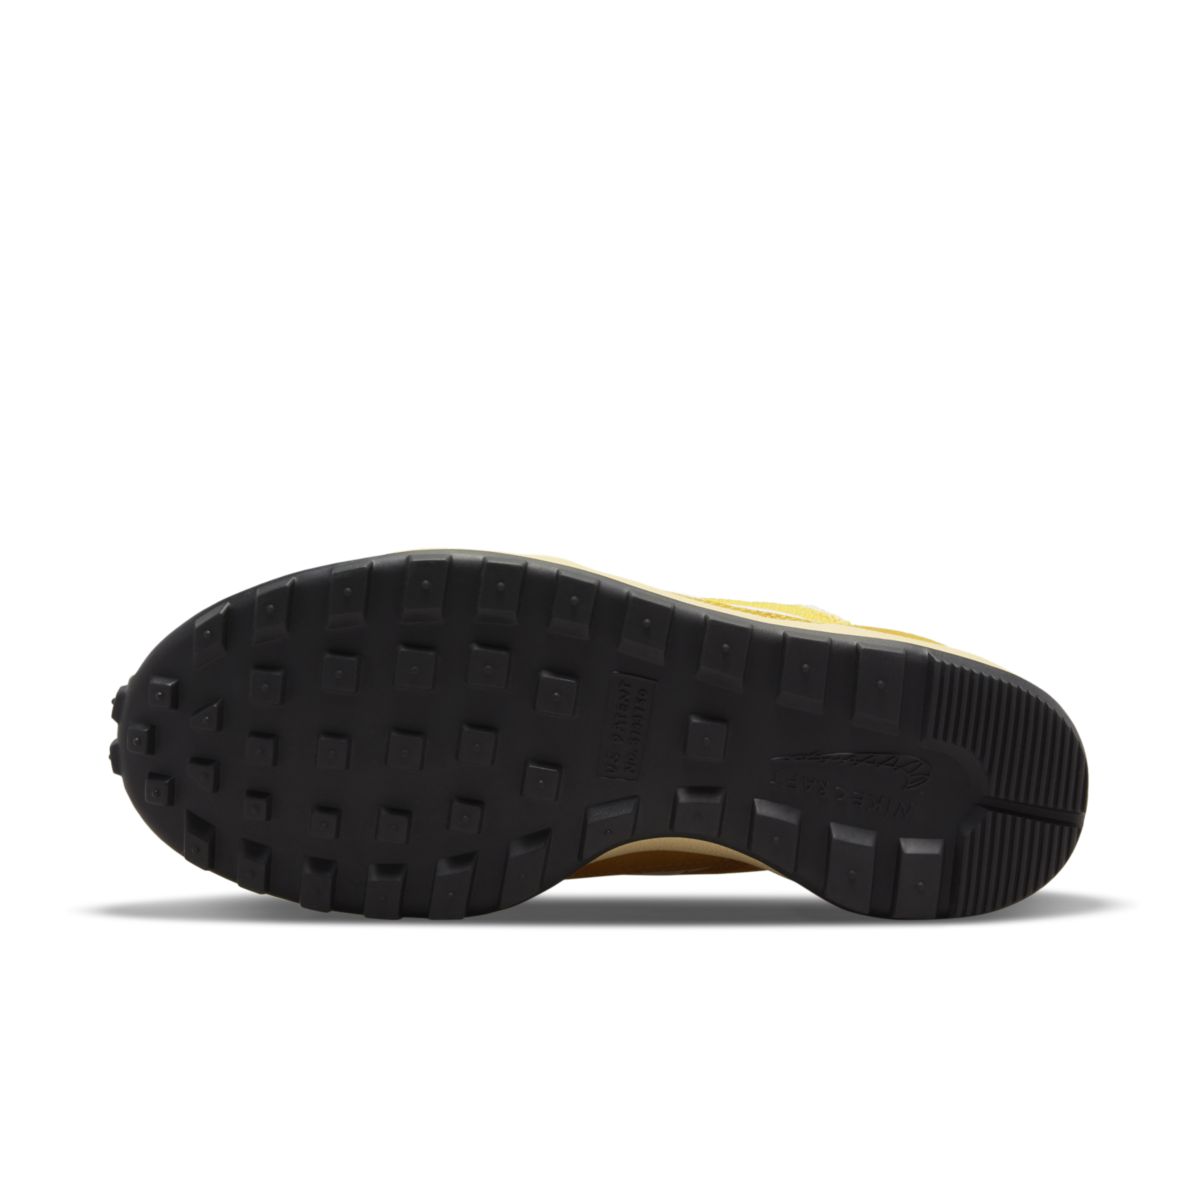 Tom Sachs x Nike General Purpose Shoe Dark Sulfur DA6672-700 1